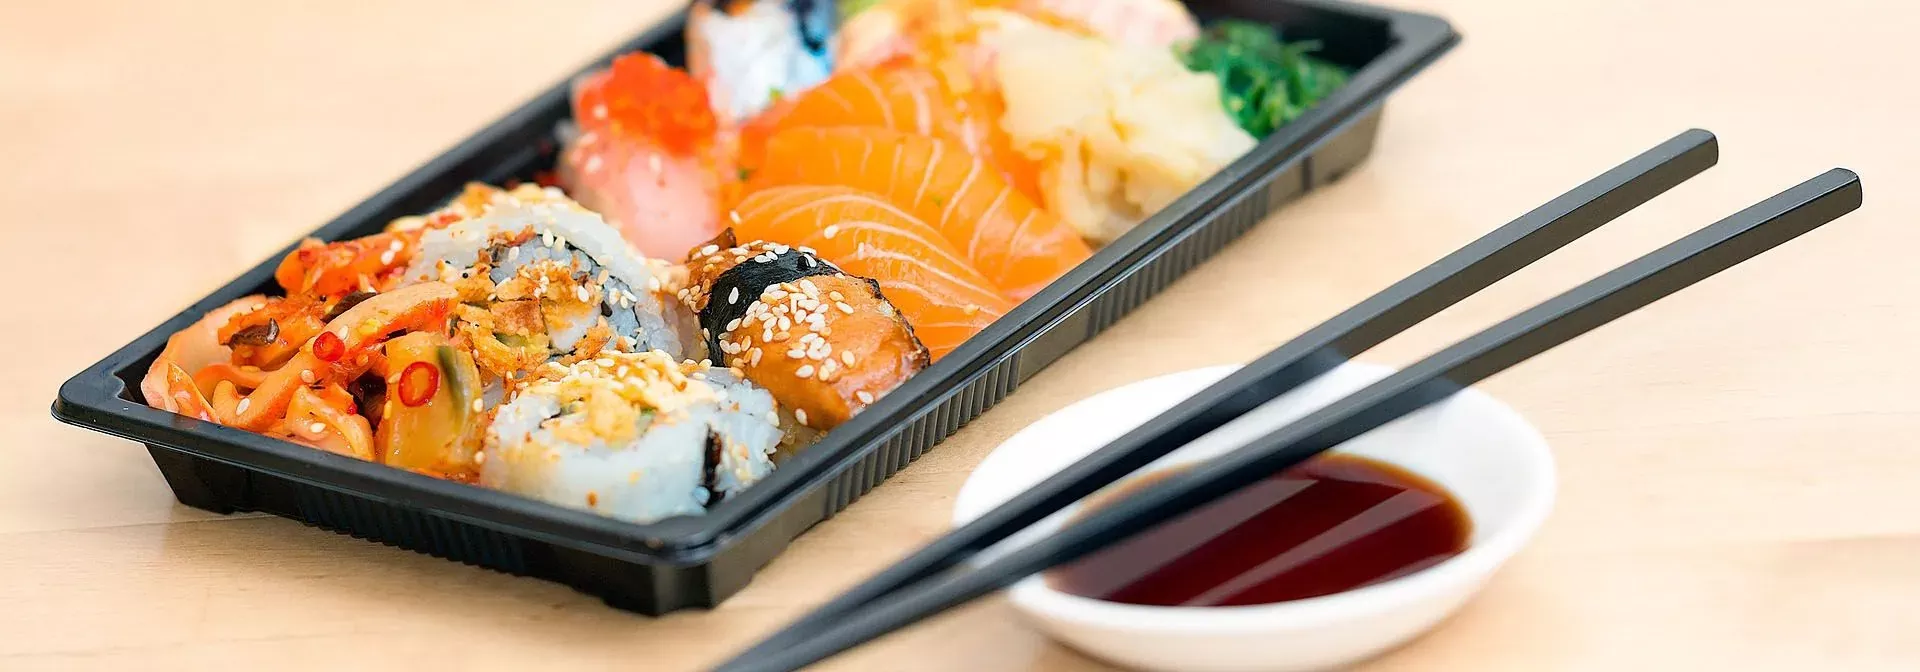 Food Safe Efsa Key Visual - Sushi Plate